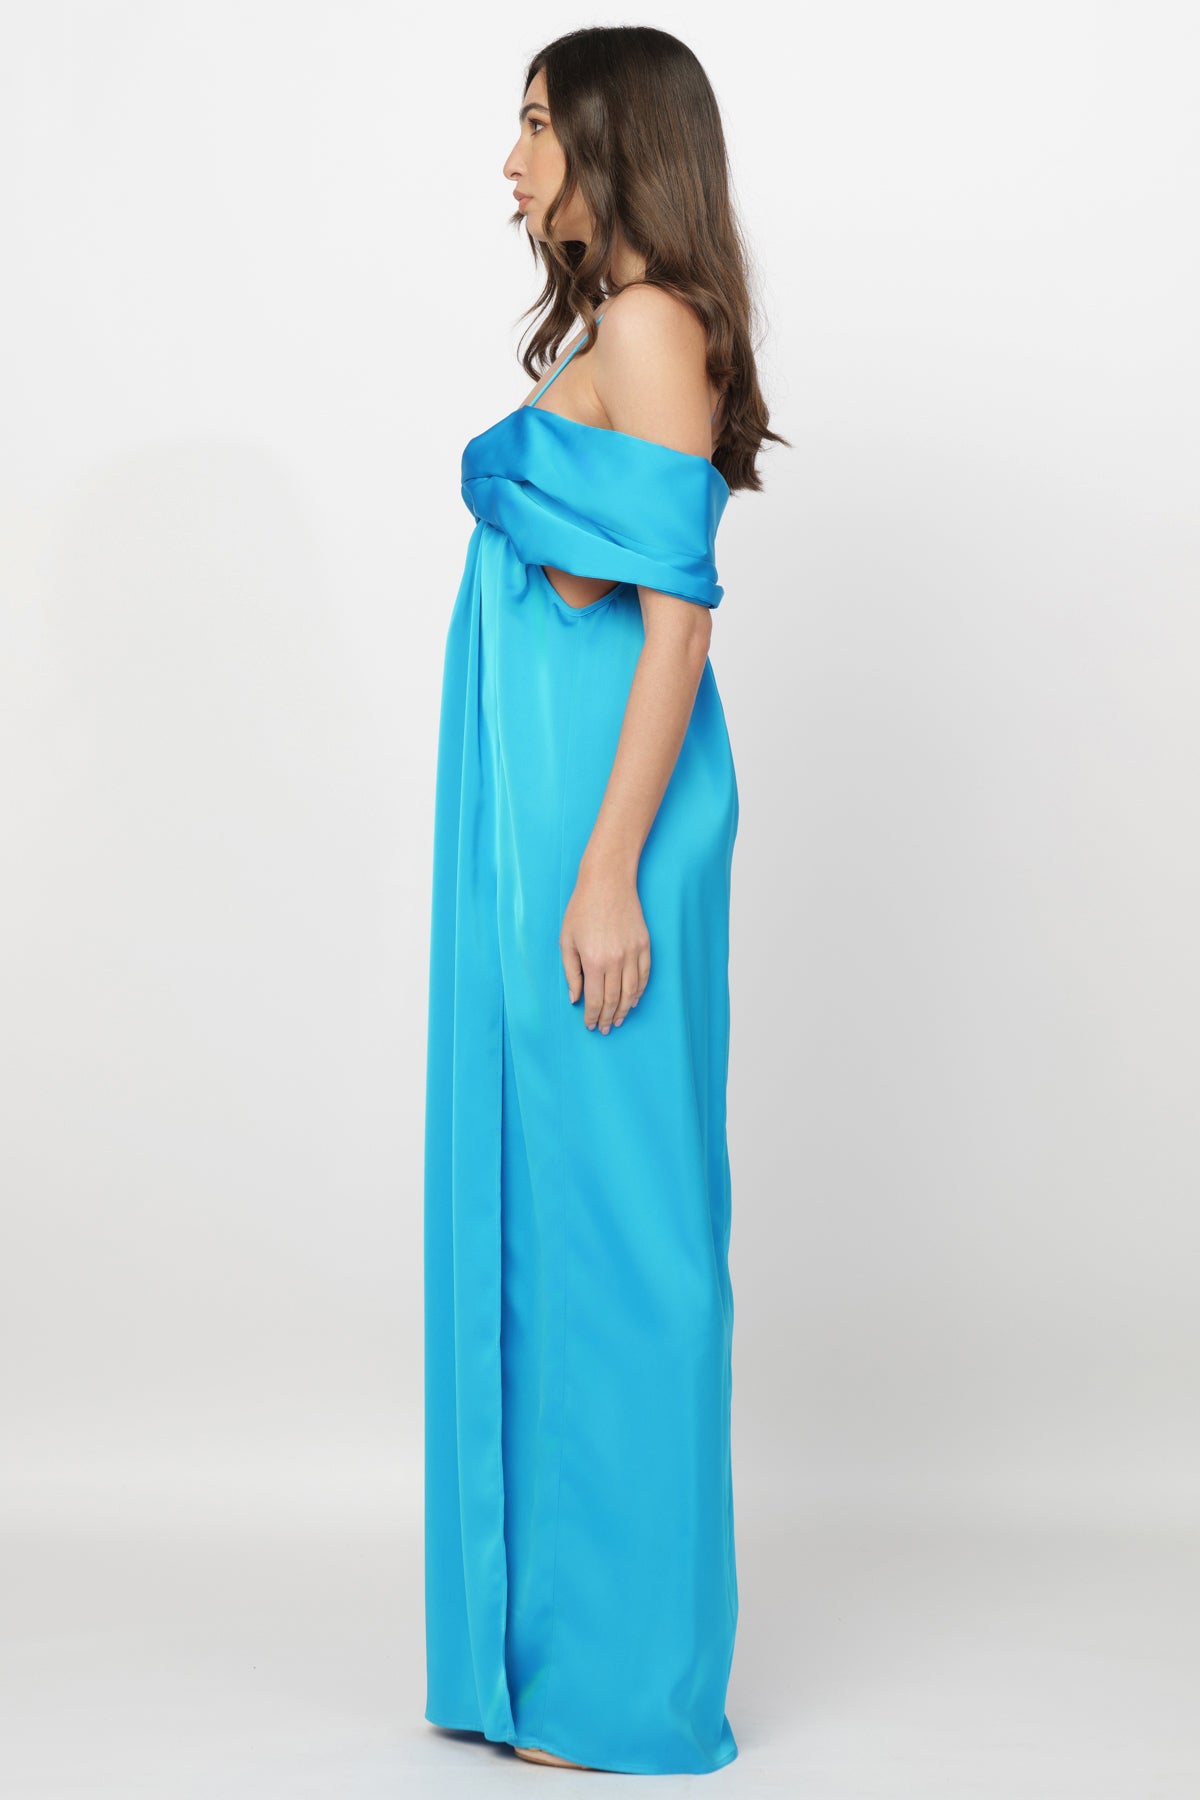 Bali blue dress